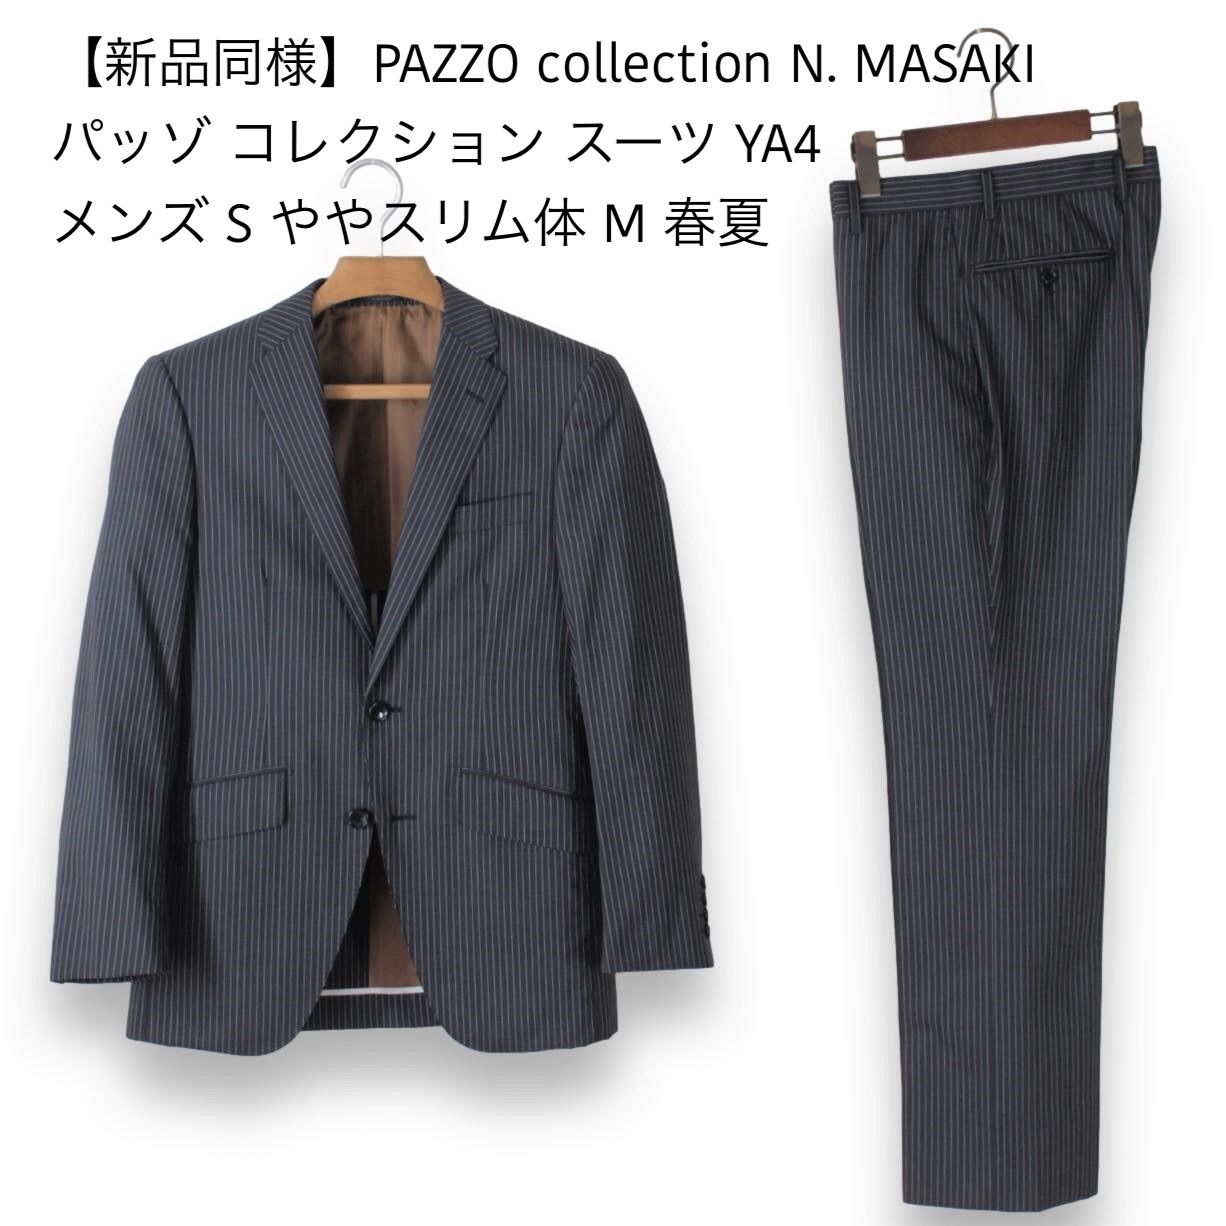 PAZZO collection 洋服の青山 スーツ - スーツ